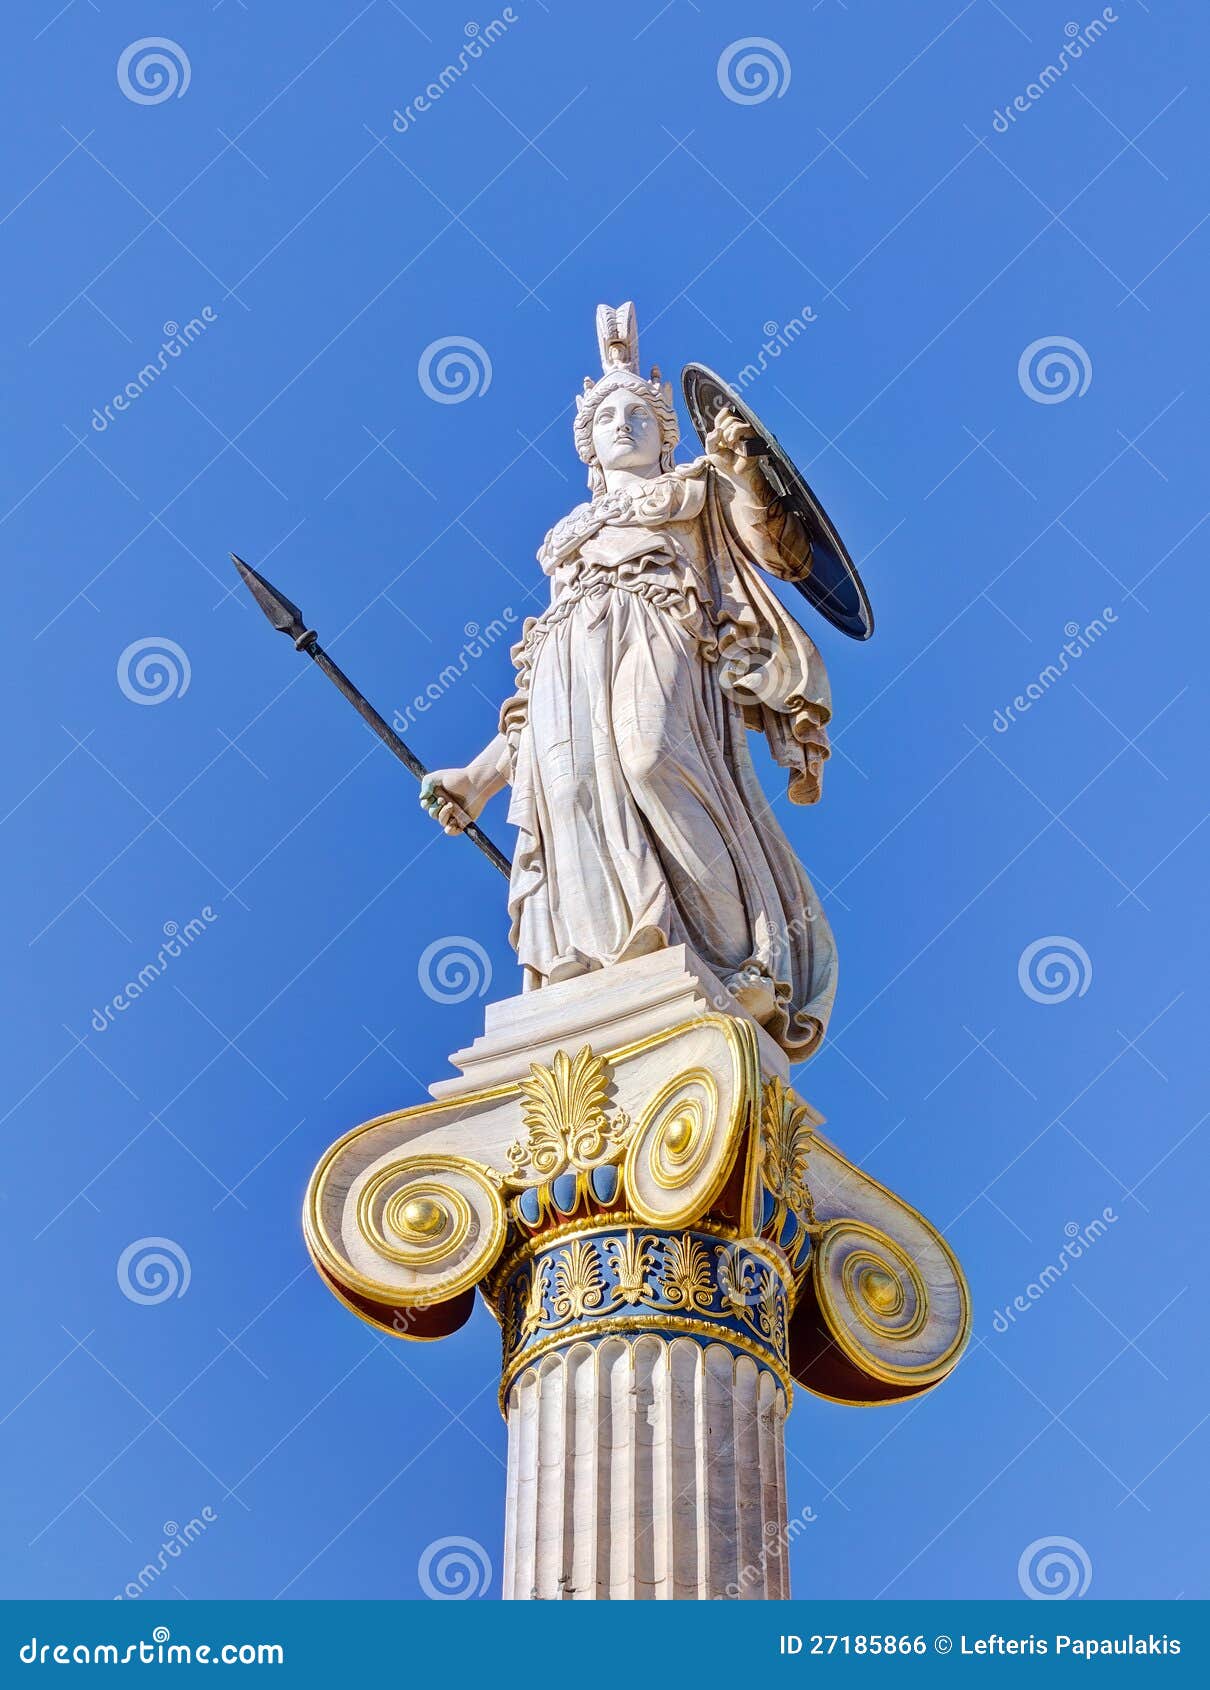 statue of goddess athena, athens, greece